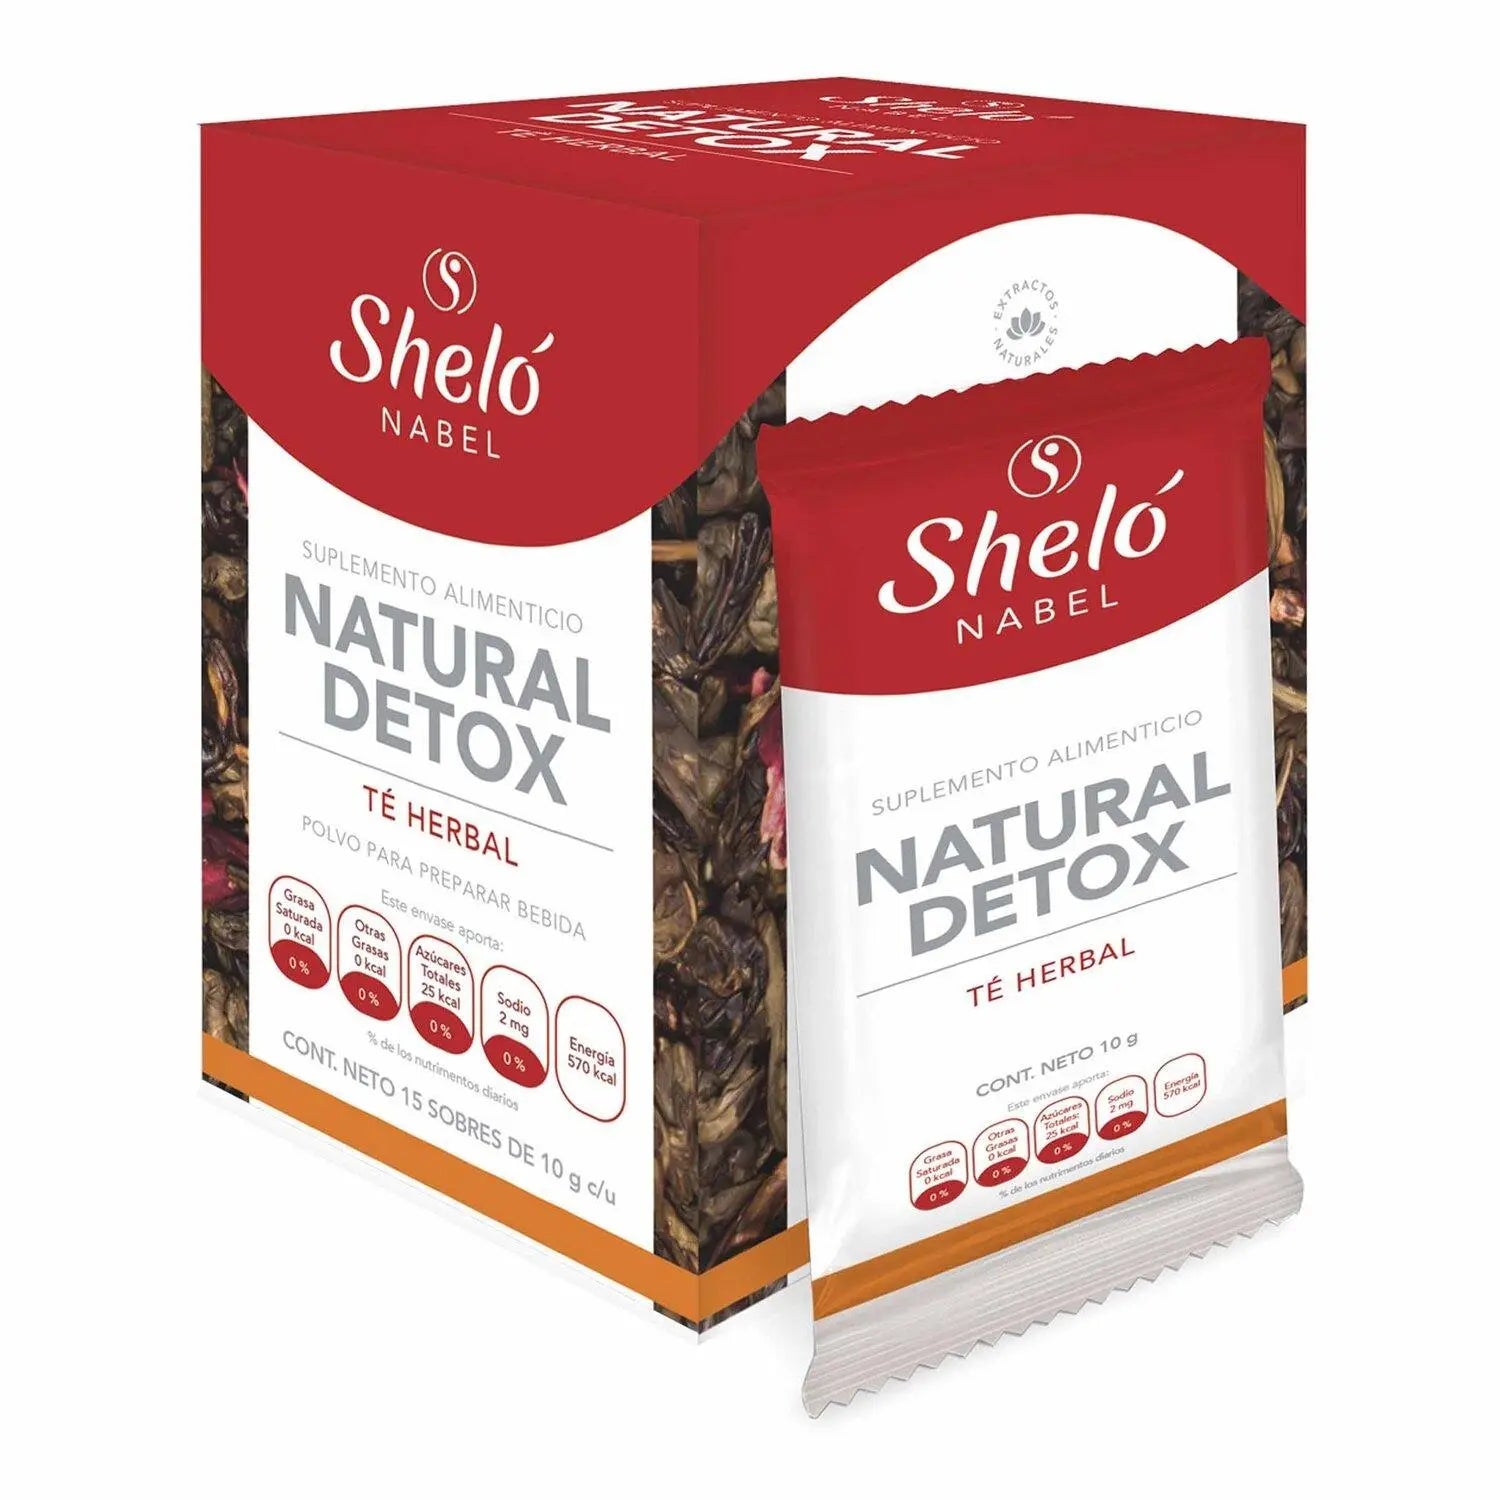 Shelo Nabel Natural Teatox - DIBENISA USA TIienda Online Comprar Sheló NABEL Estados Unidos, Shelo Nabel Store, Distribuidor Diana Perez